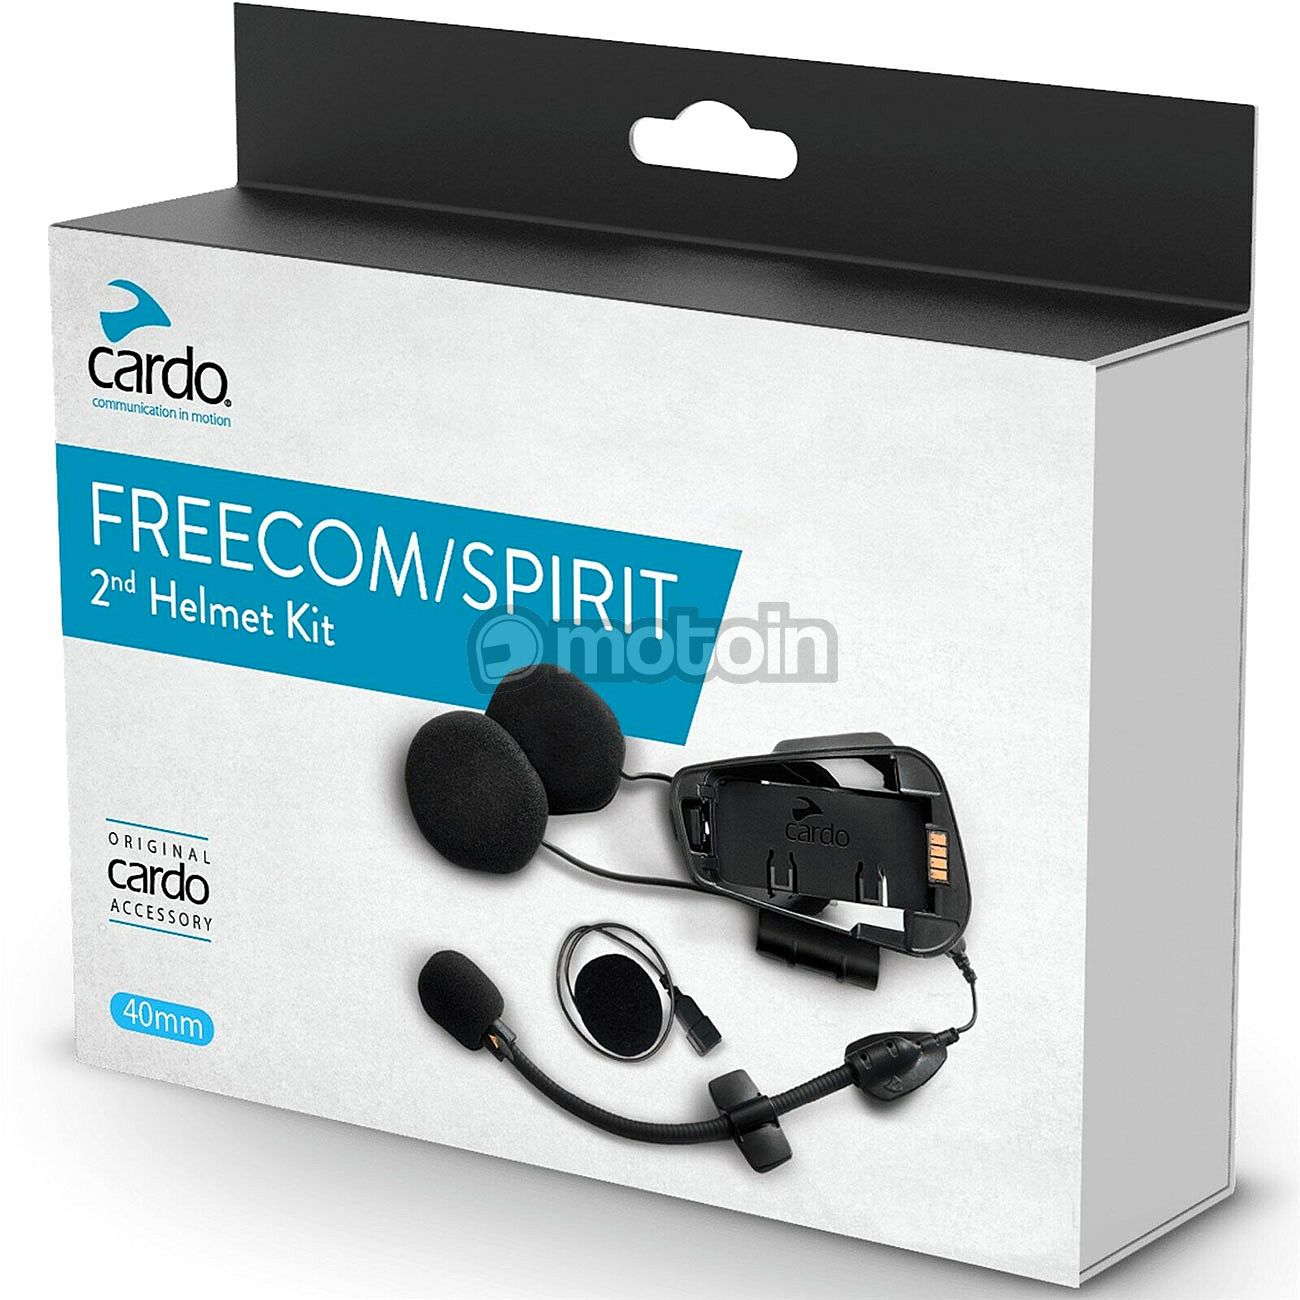 Cardo Freecom/Spirit, audio kit